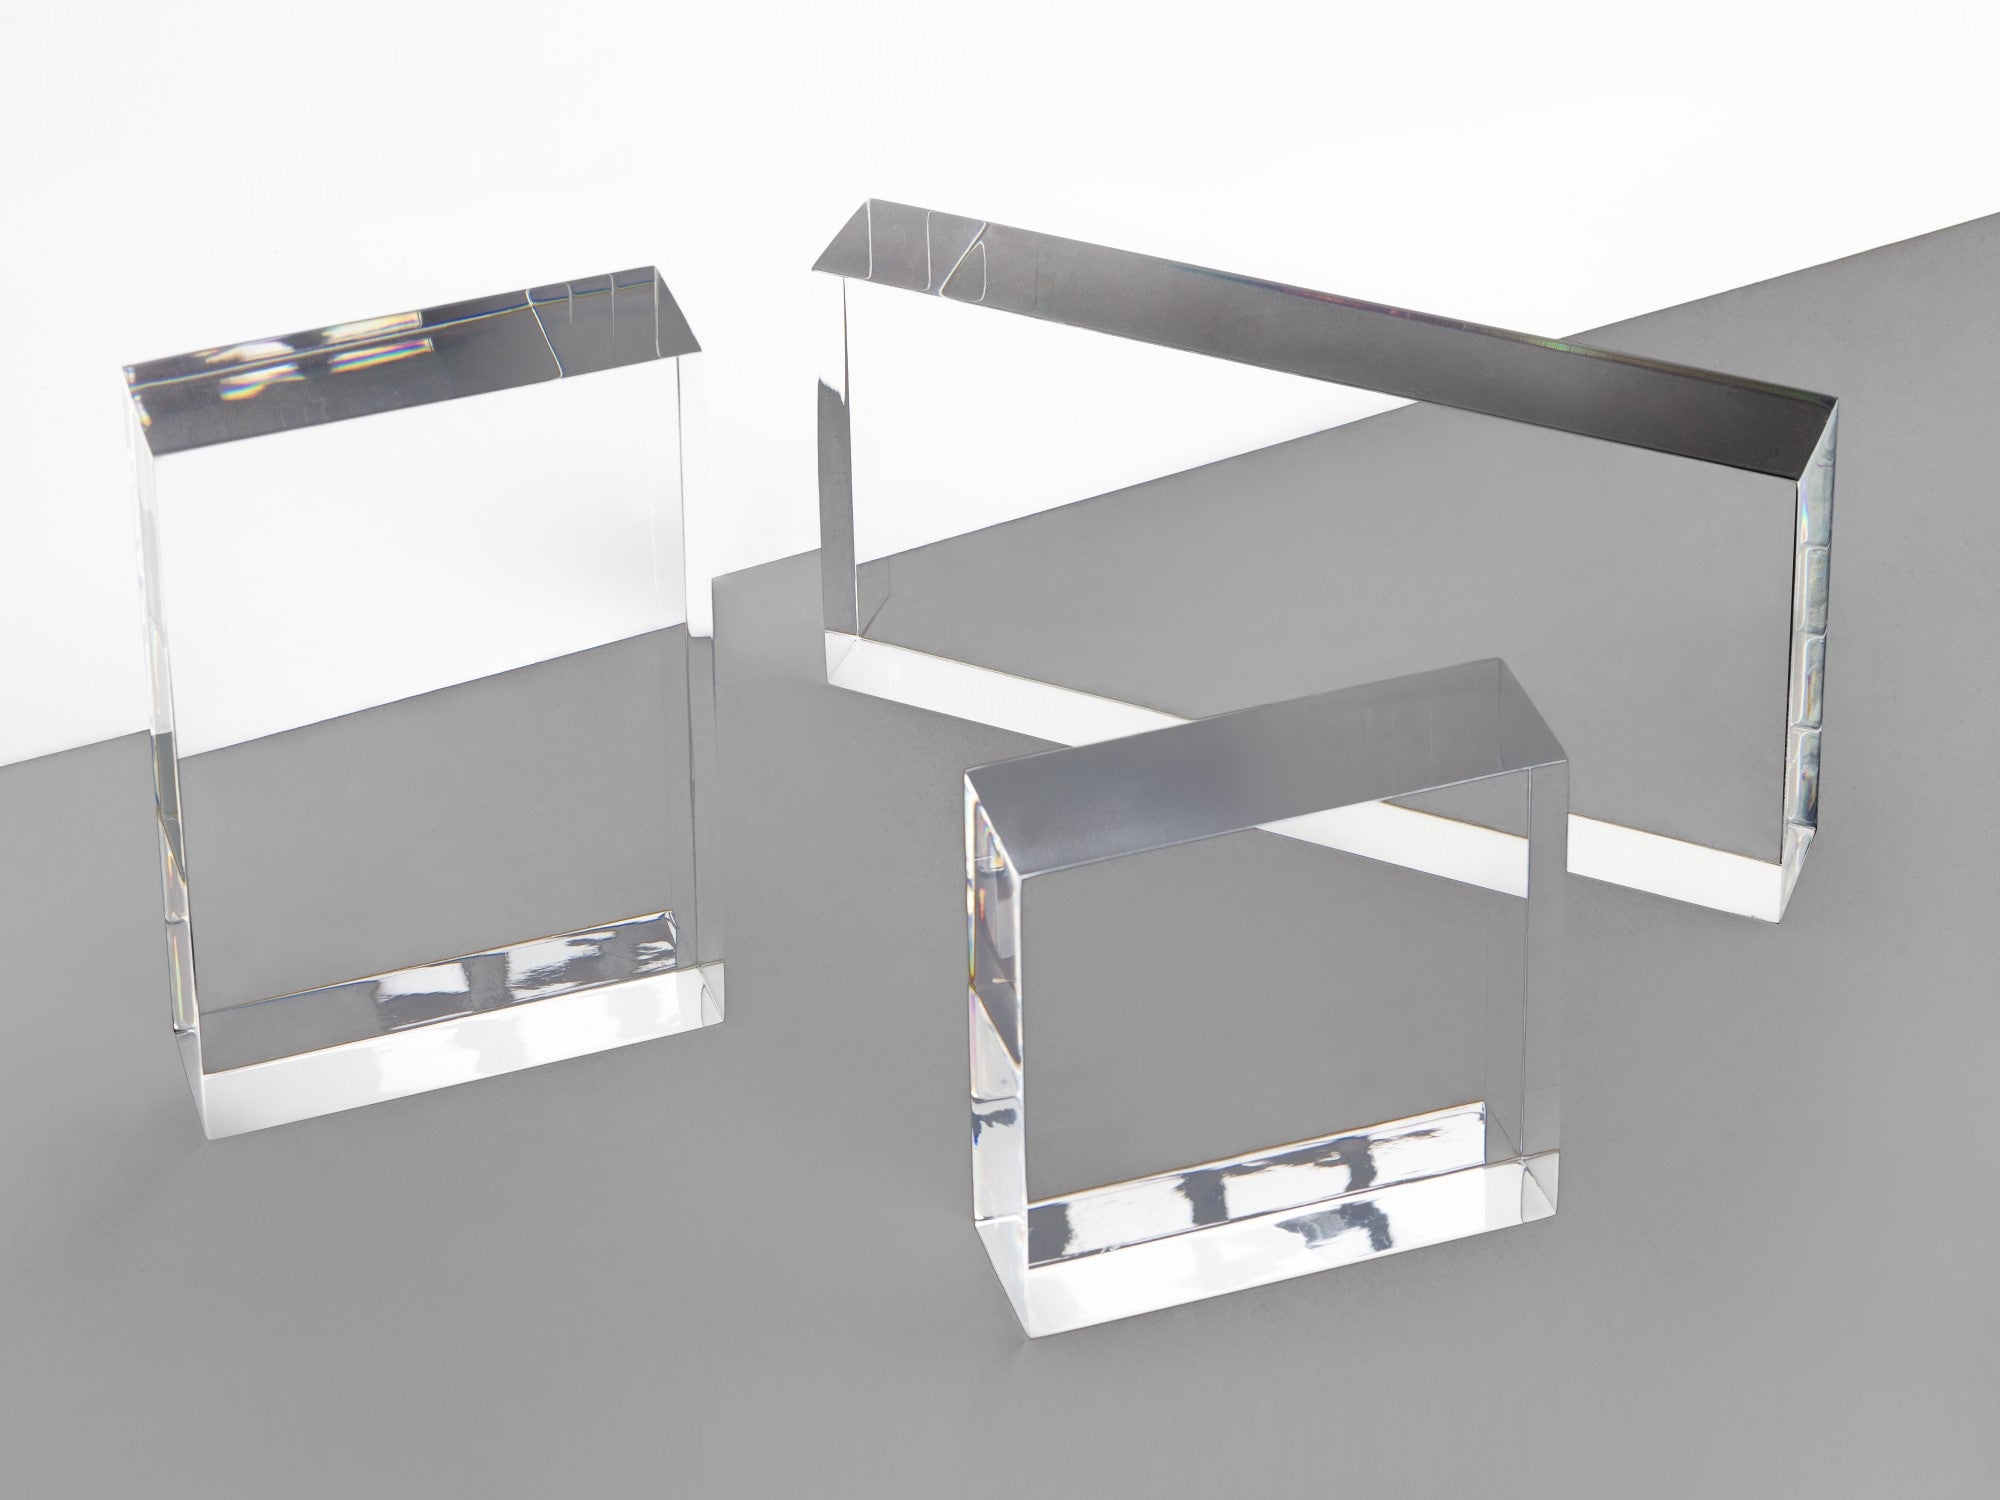 Plexiglass Mirror  Buy Plexiglass Shatter-Resistant Acrylic Mirror Sheets  Online - Regal Plastics